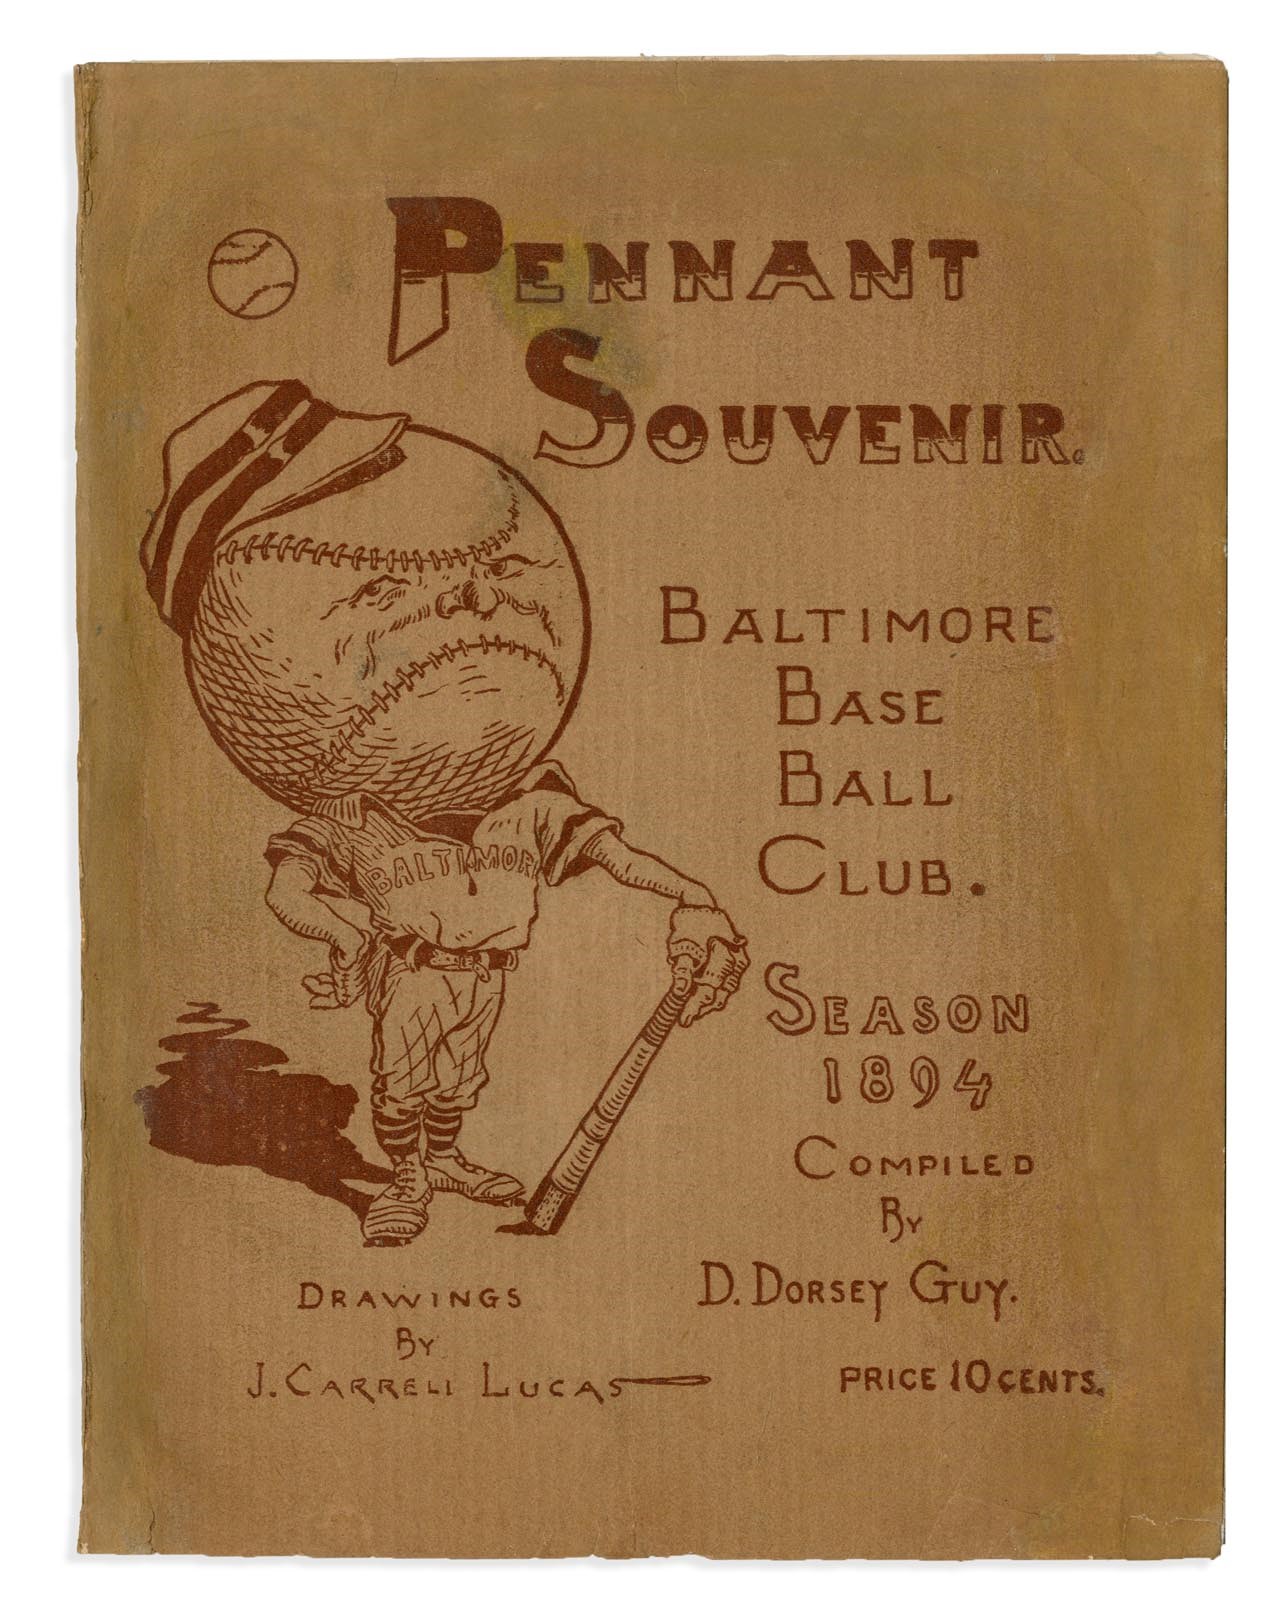 - 1894 Baltimore Base Ball Club "Pennant Souvenir